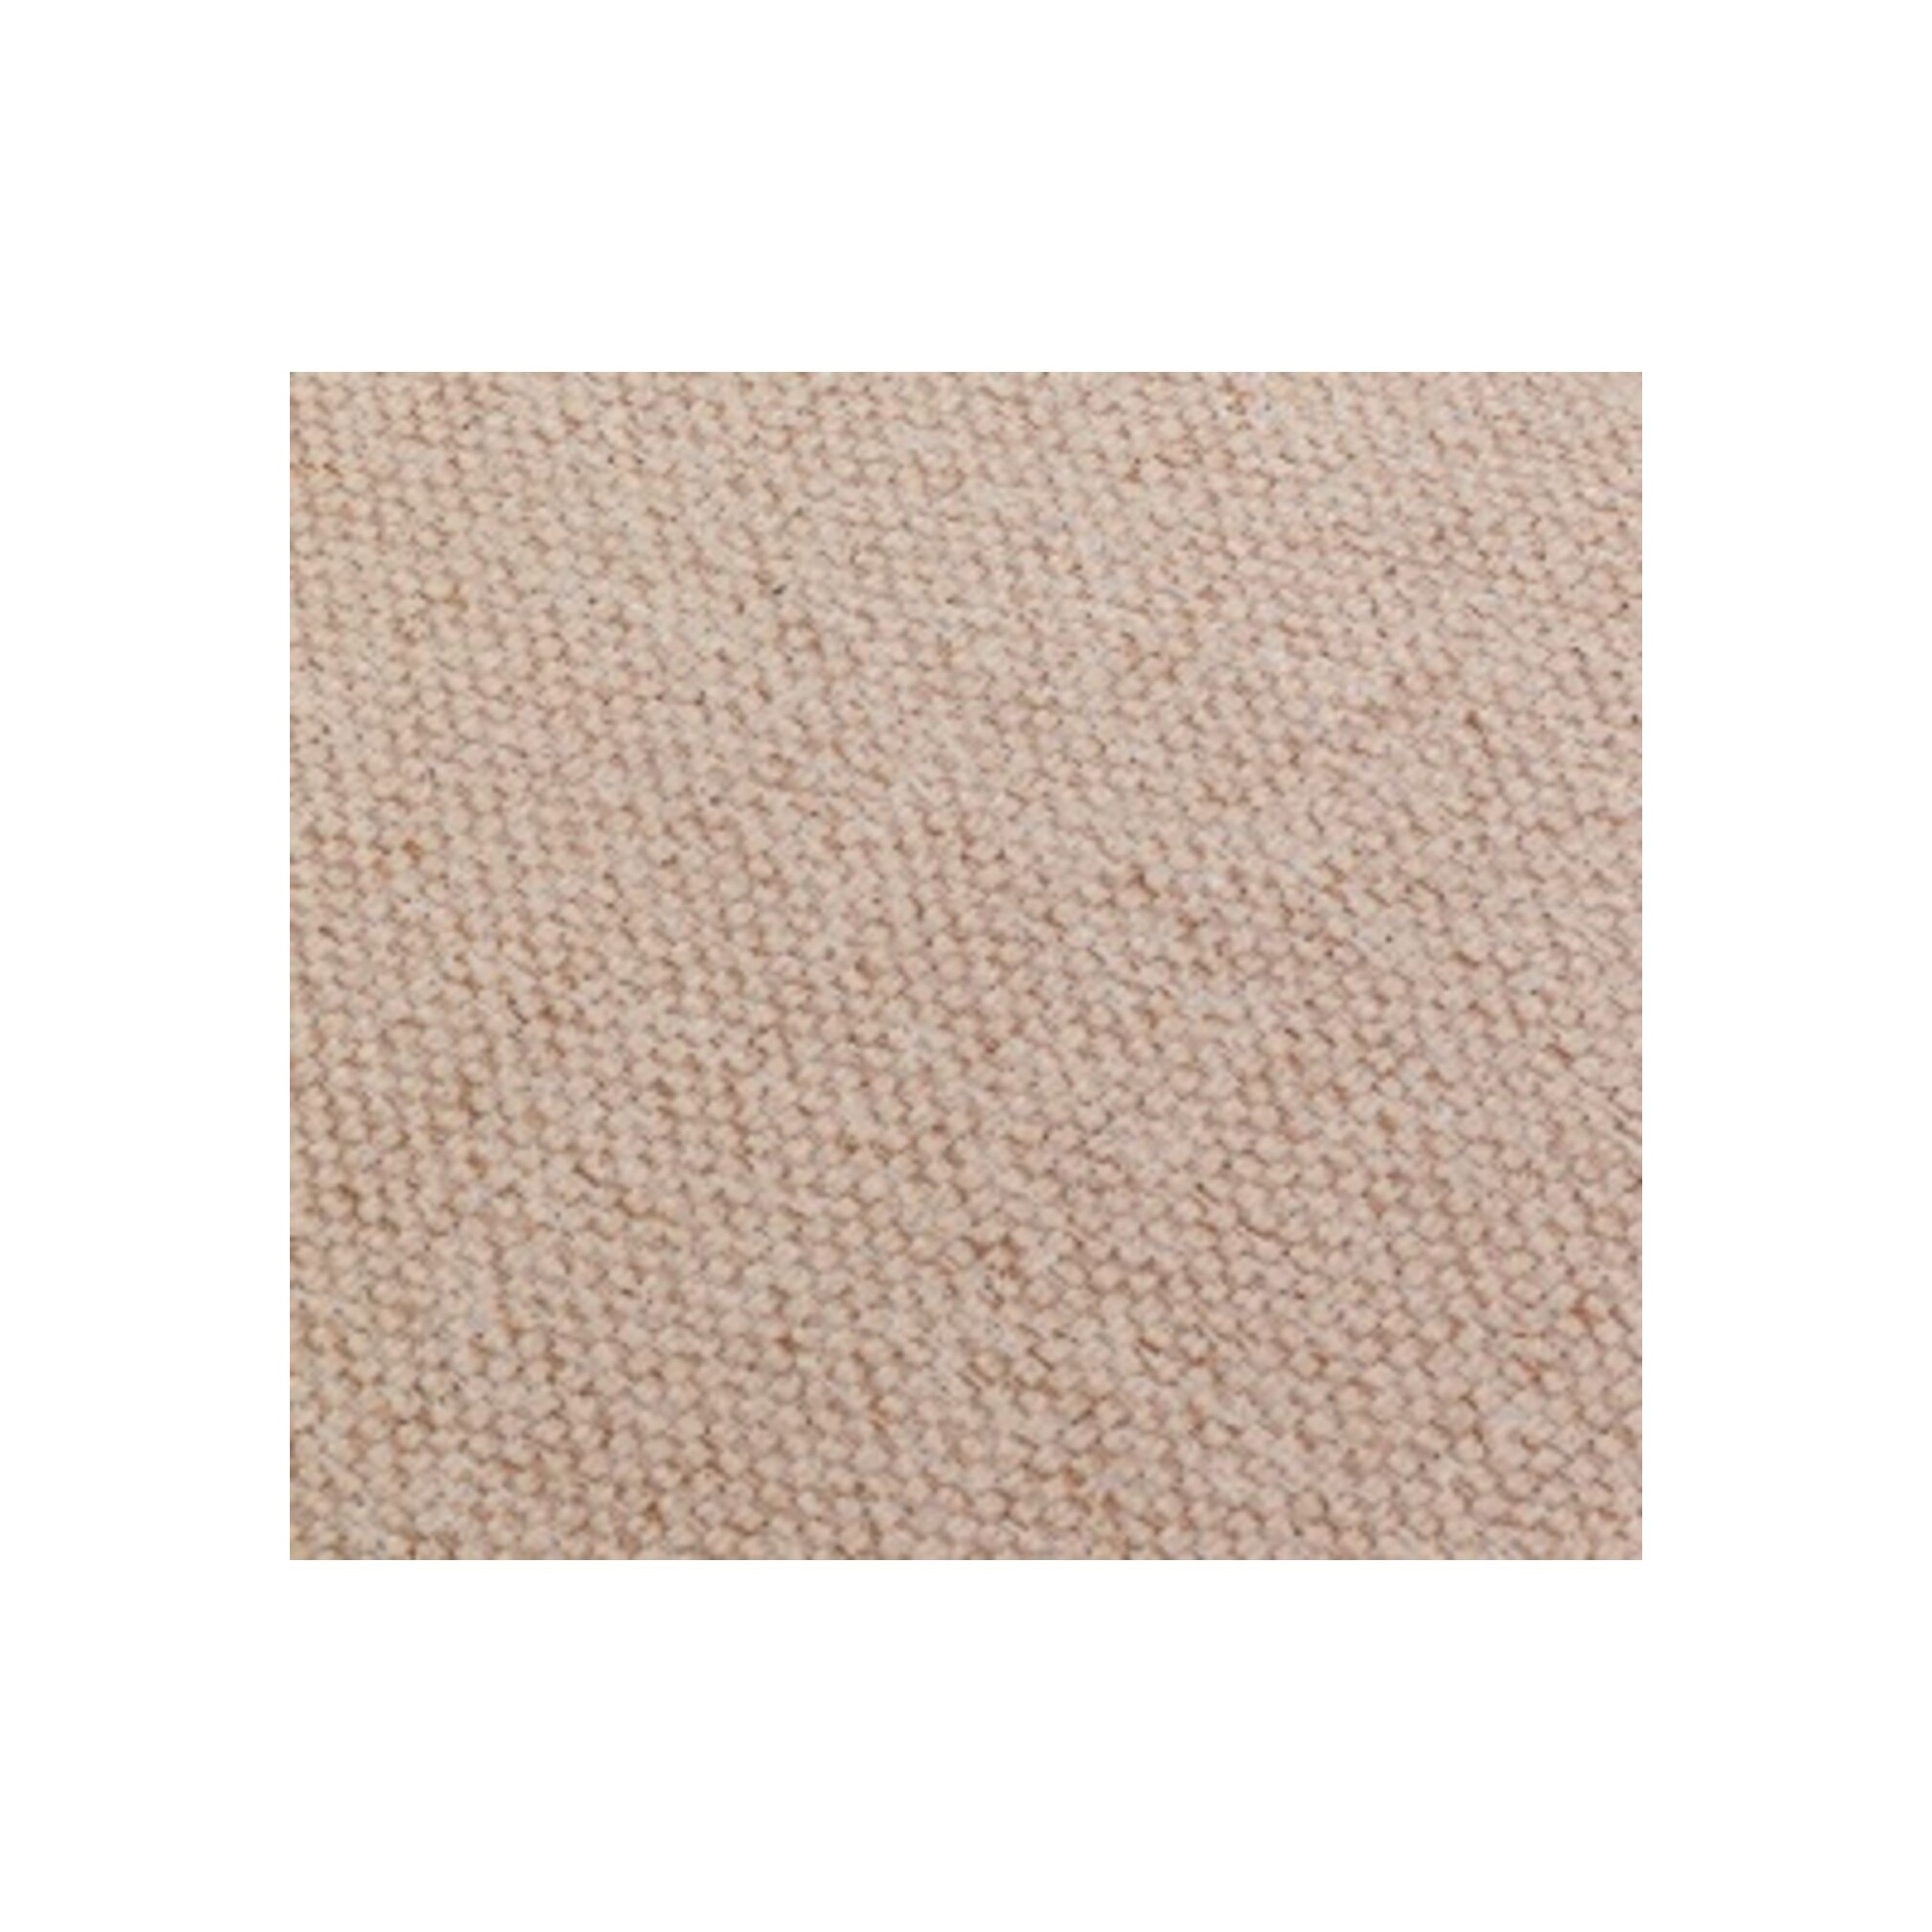 Echantillon tissu GR crème 10x10